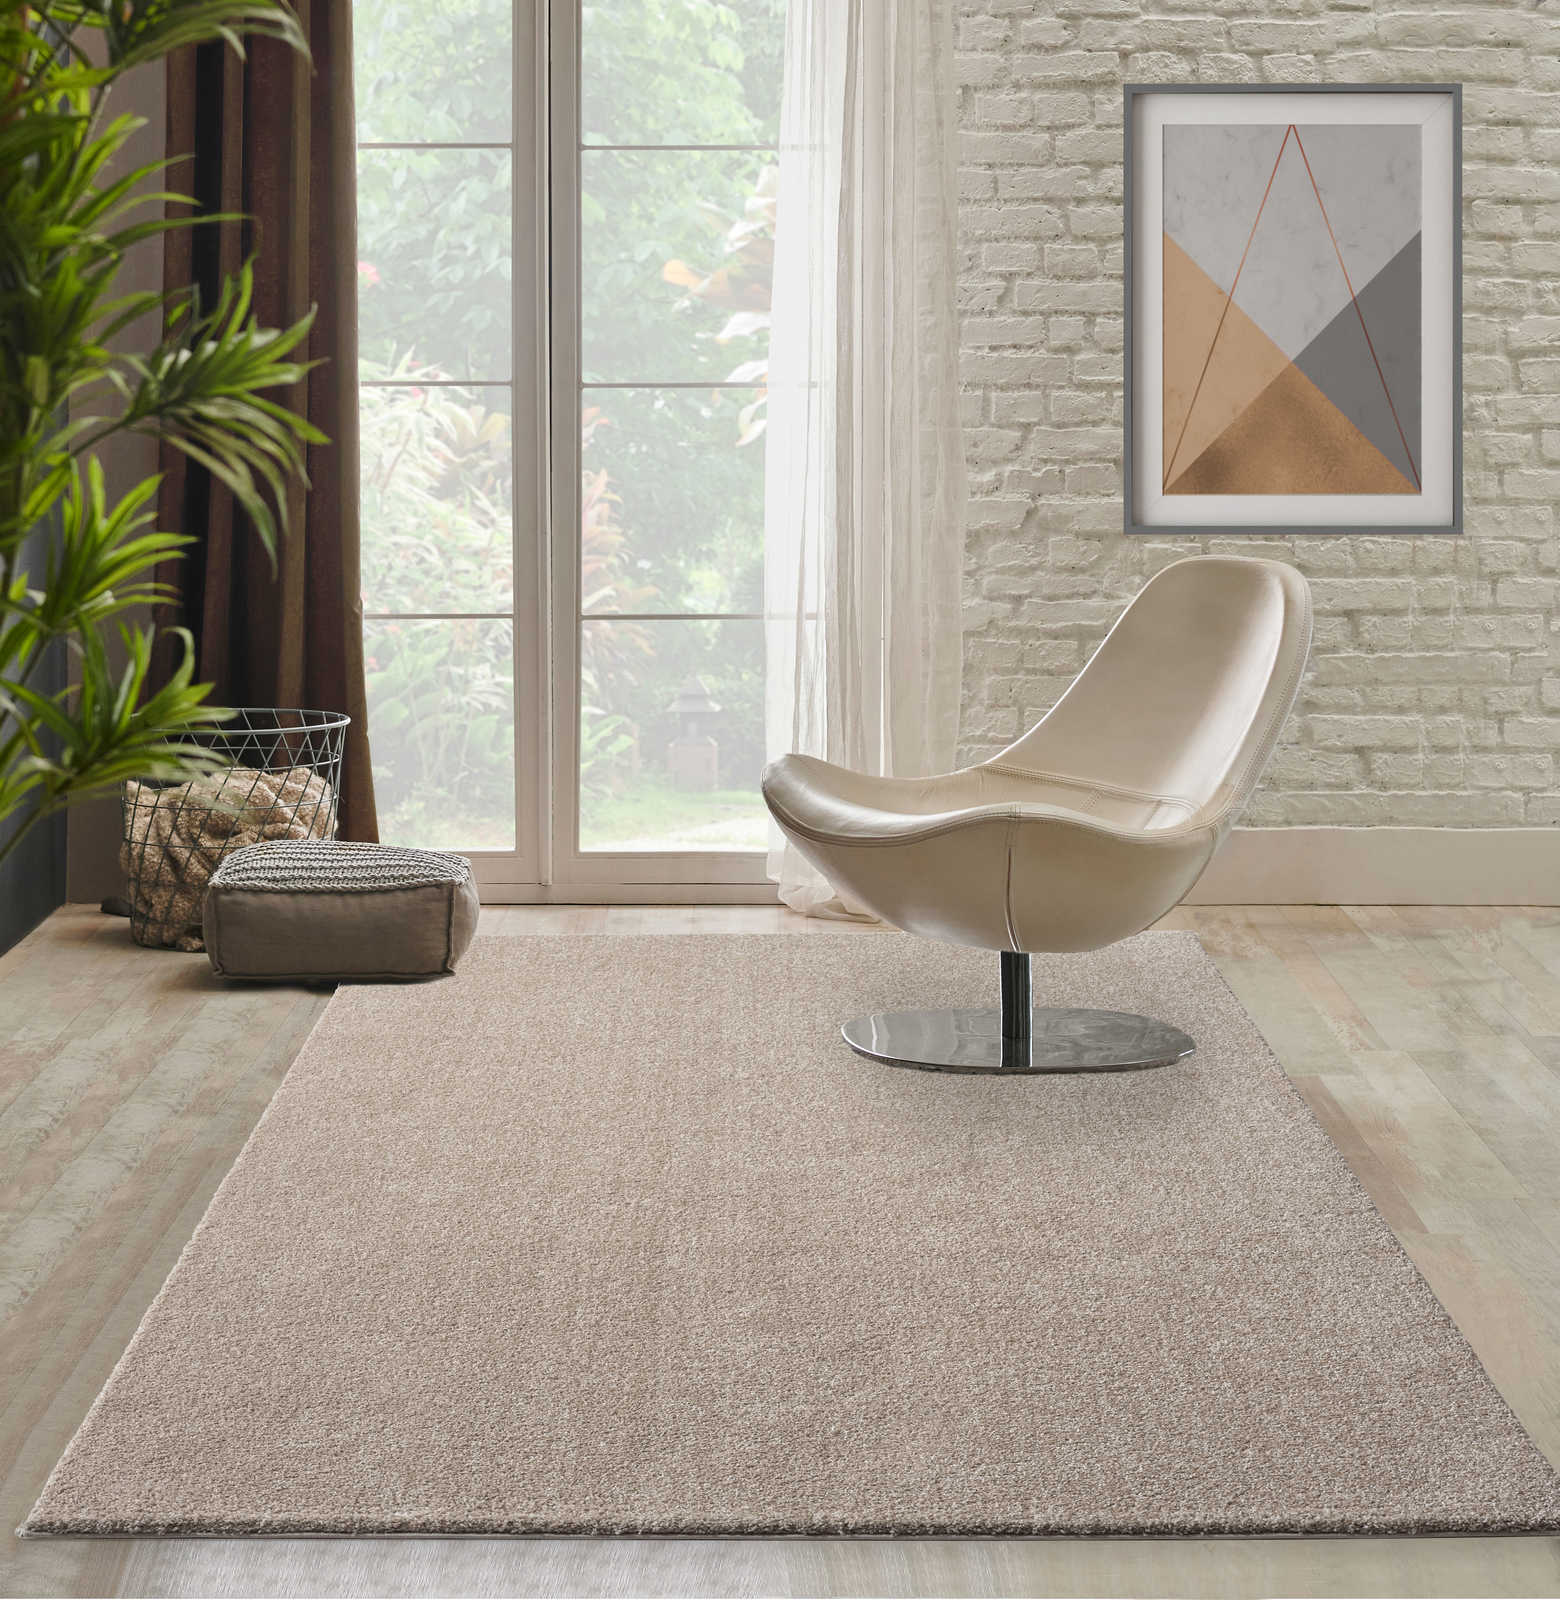 Soft short pile carpet in beige - 110 x 60 cm
